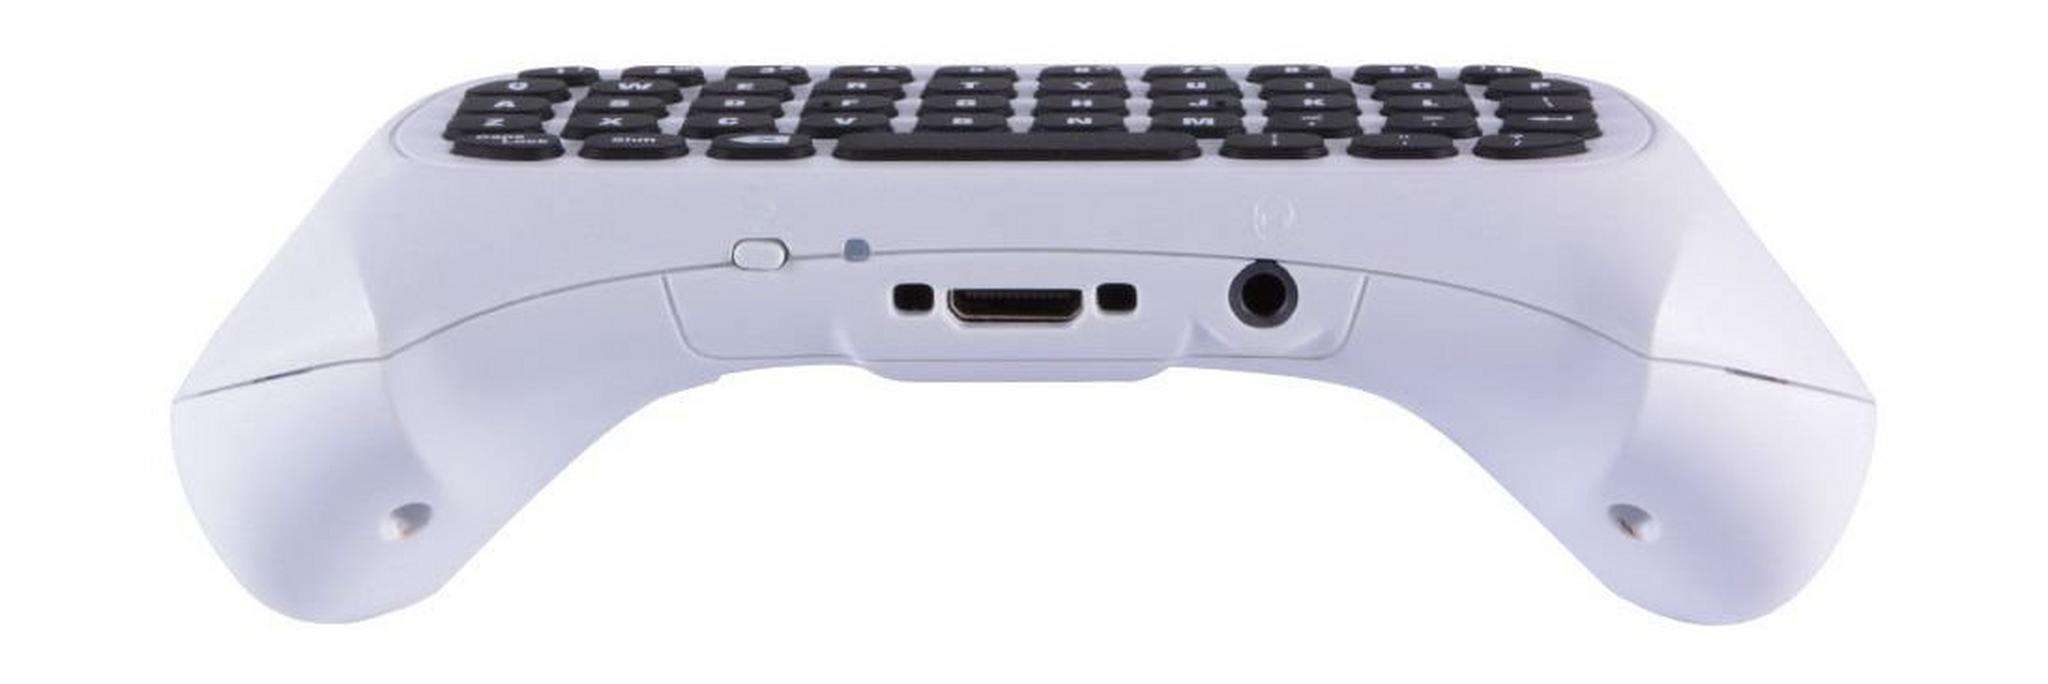 Wireless Mini Xbox One Controller Keyboard Chatpad - White